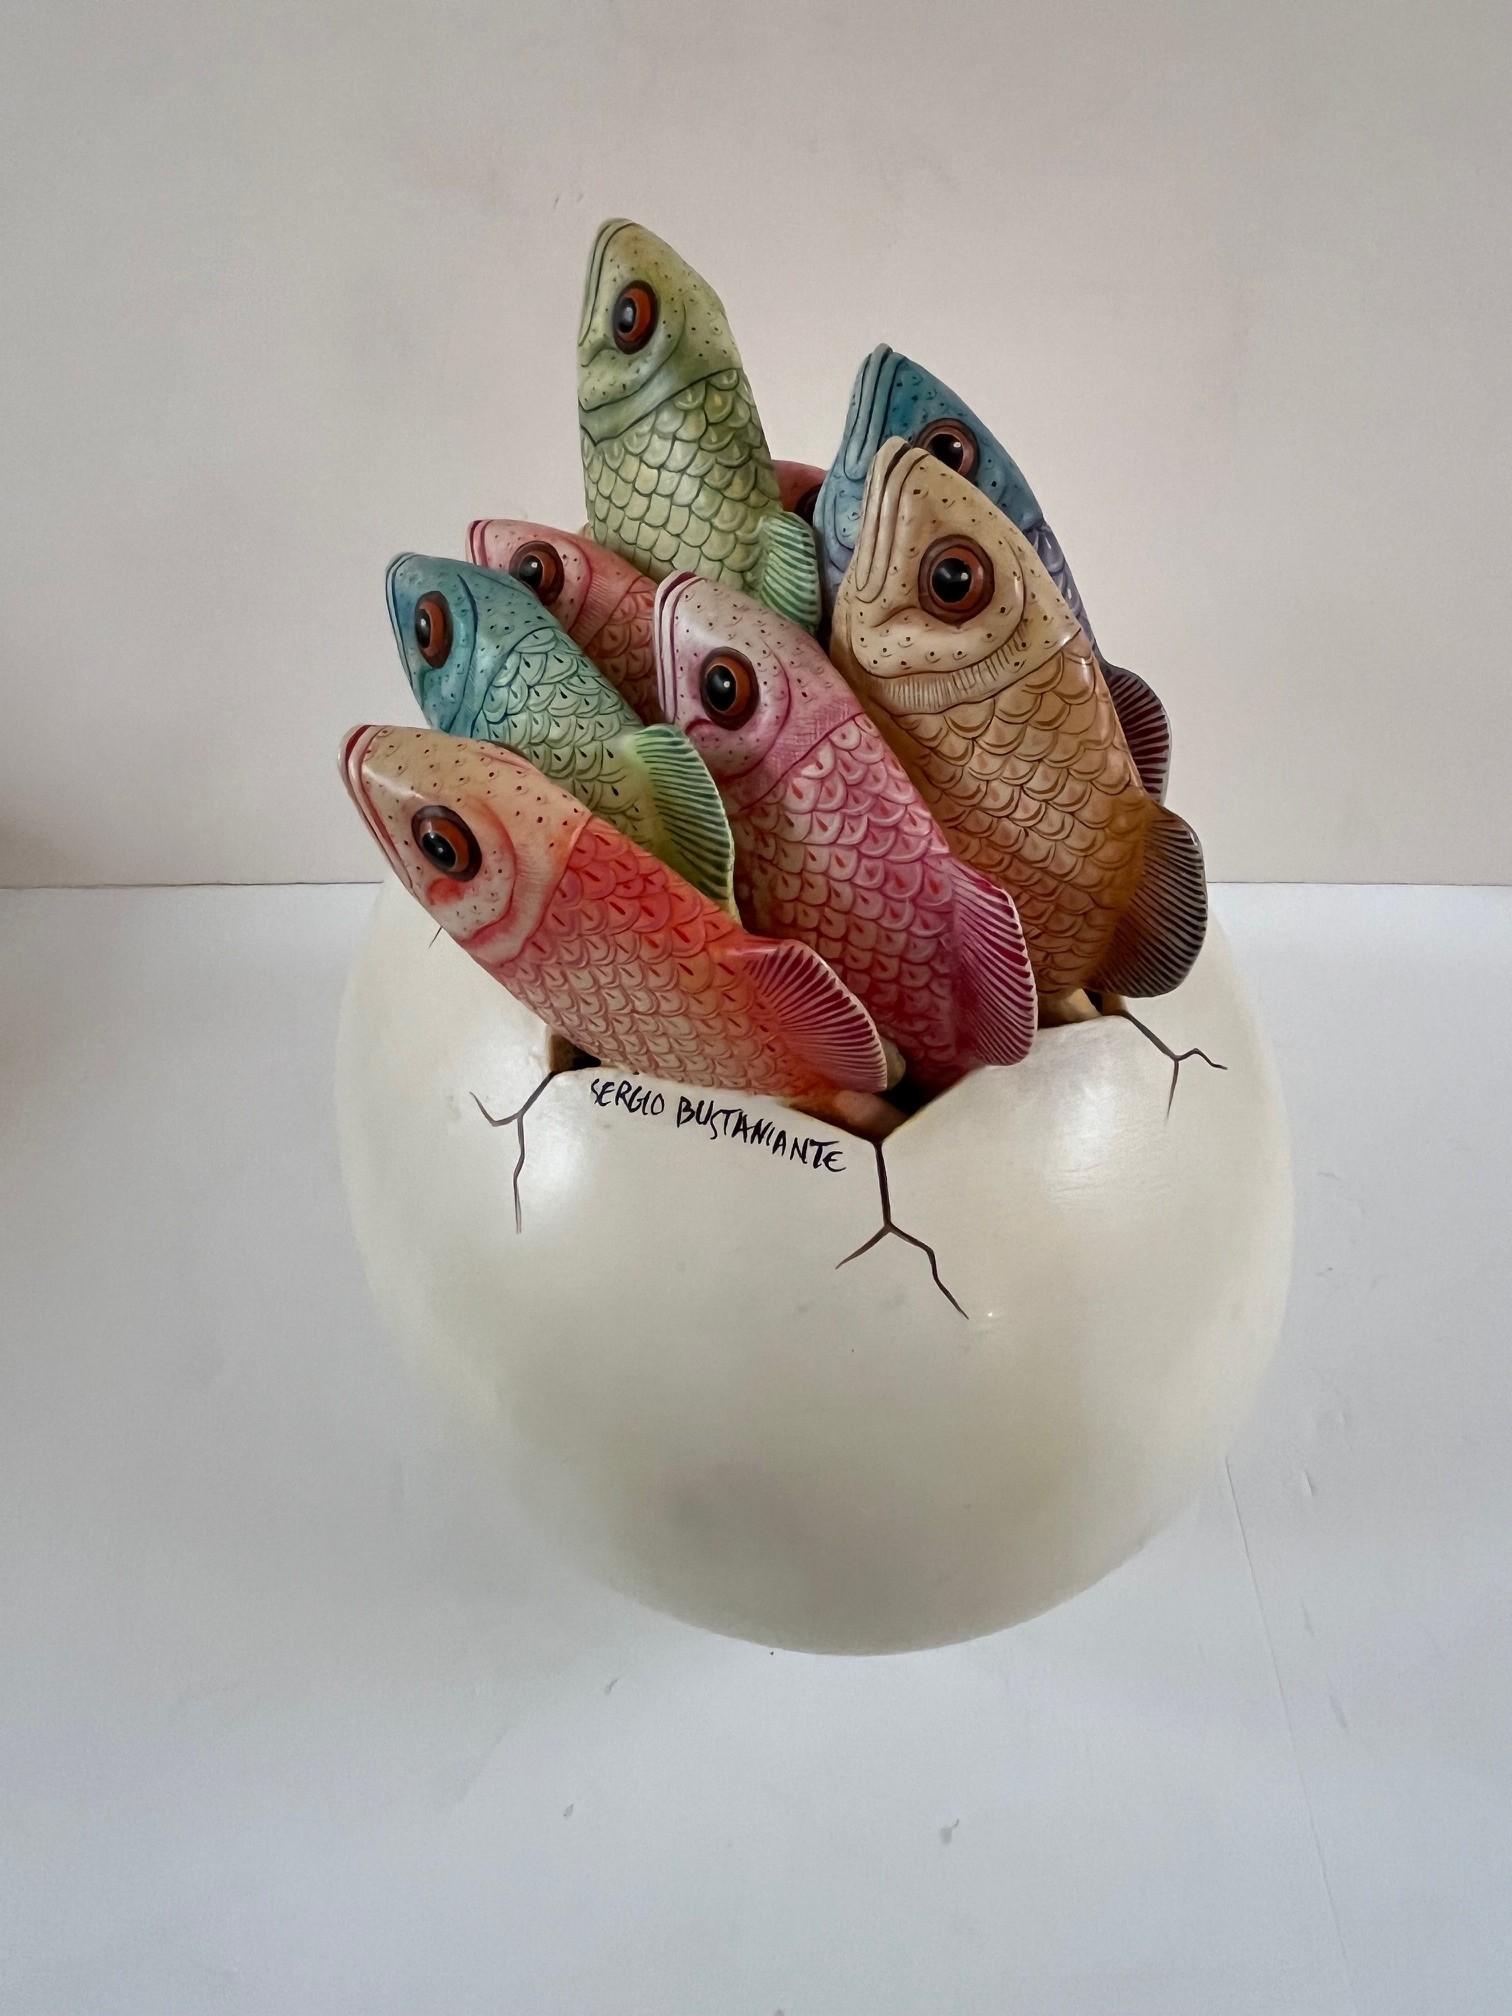 Glazed Vintage Large Ceramic Hatching Fish Egg Sculpture Figuring by Sergio Bustamente. For Sale